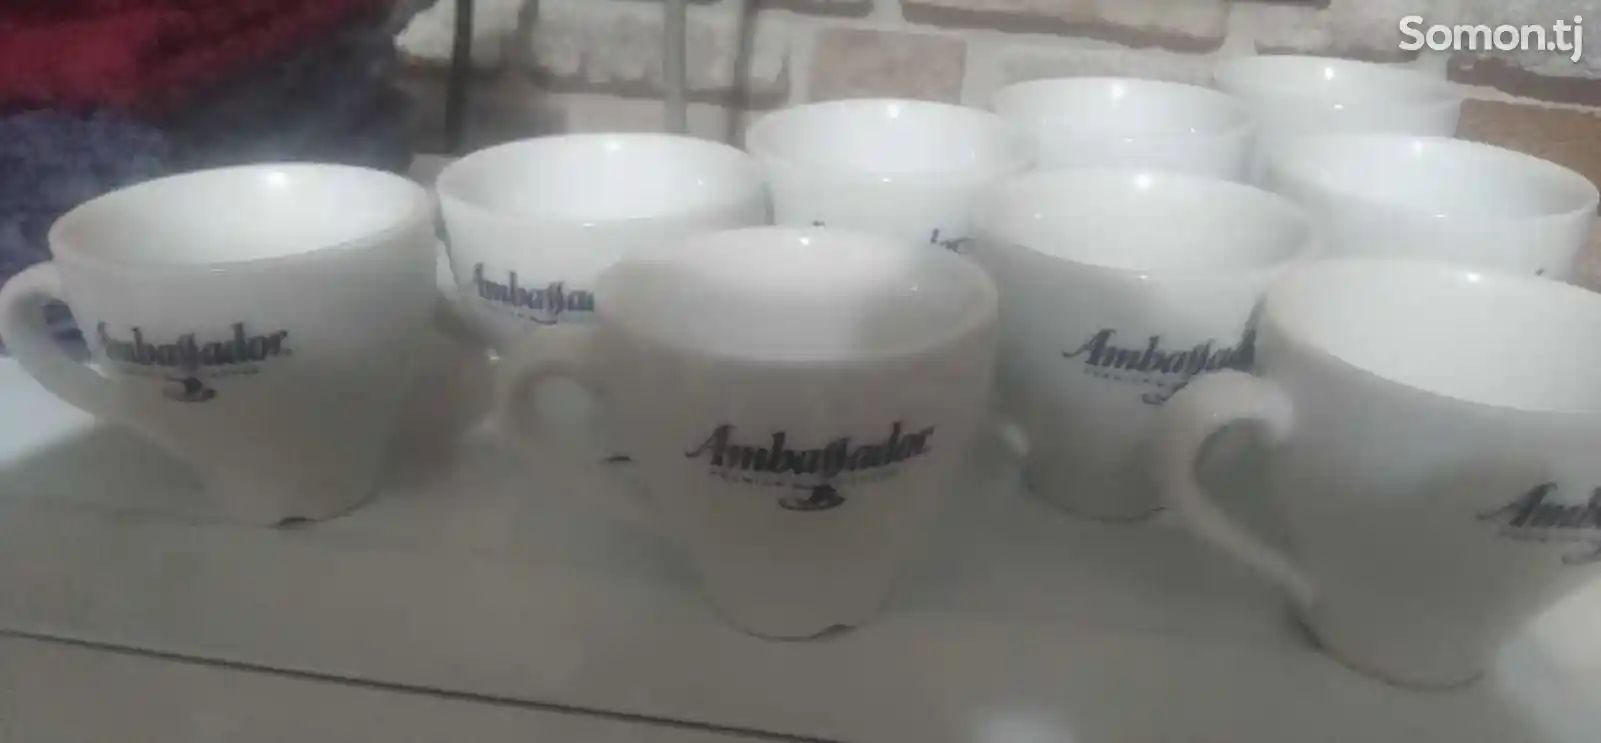 Комплект кофейных чашек Амбассадор